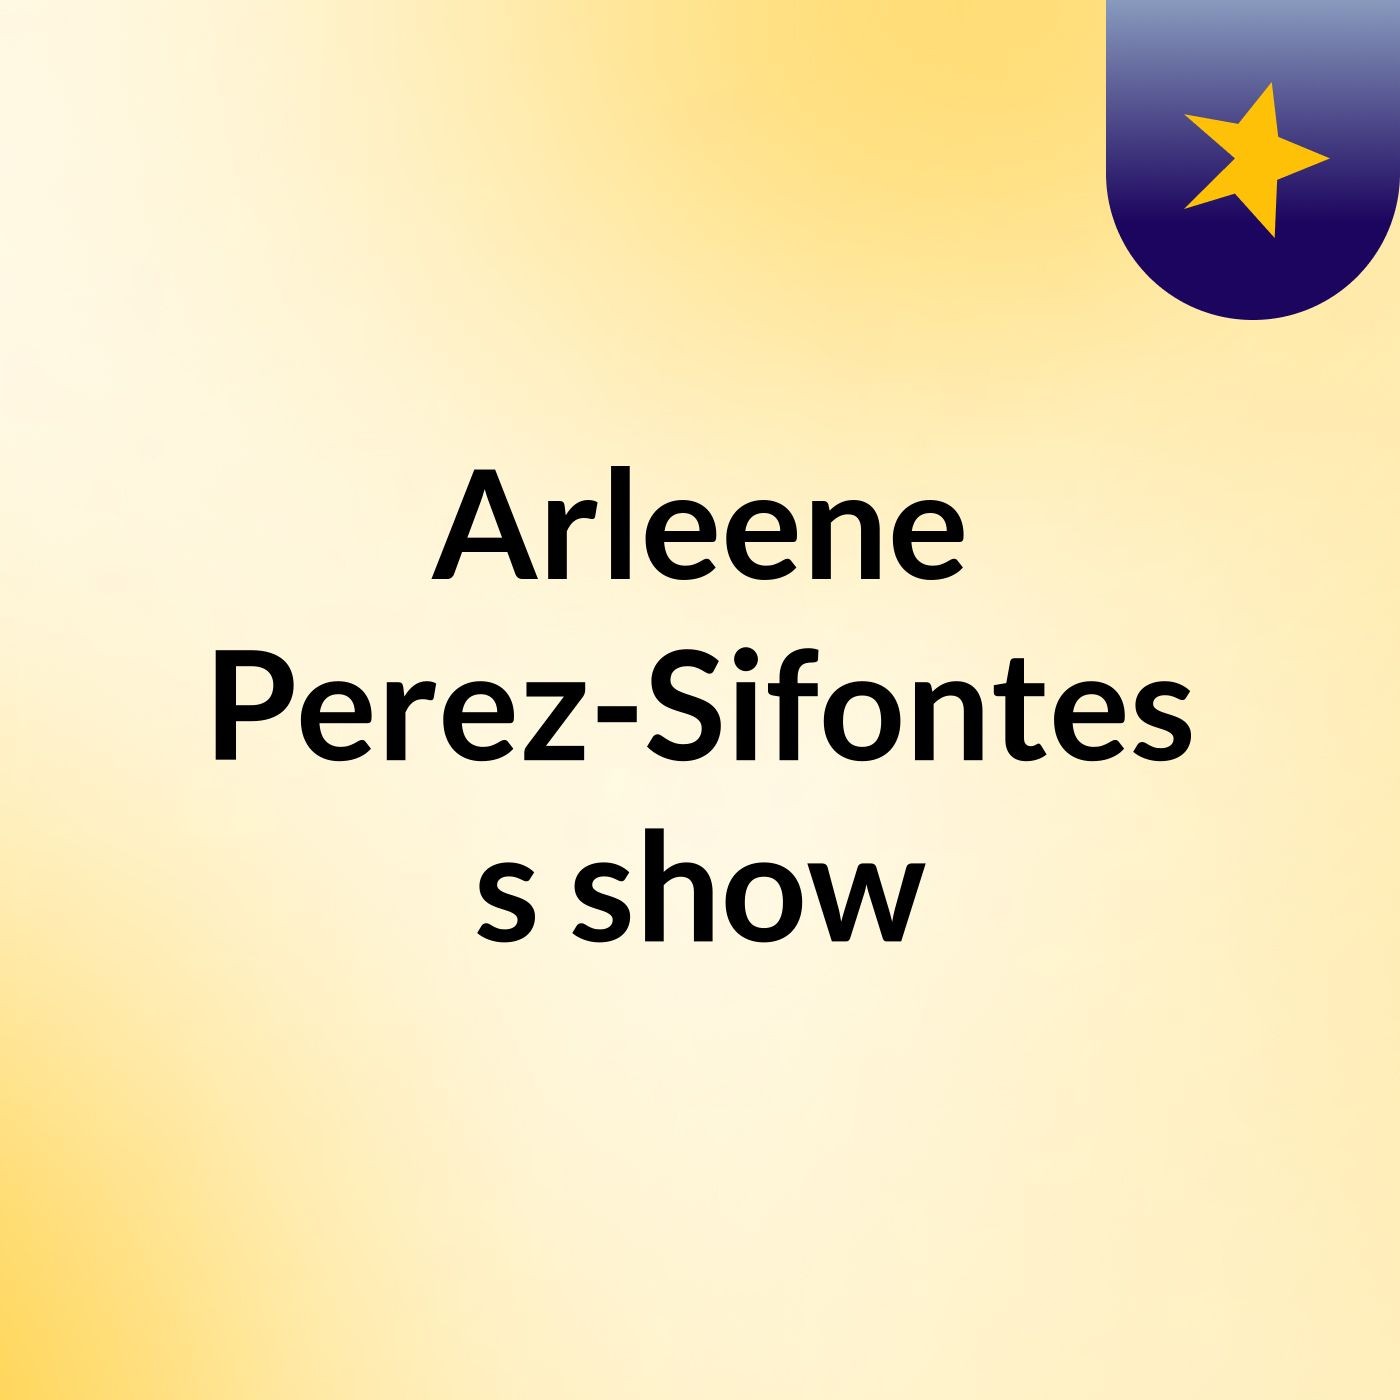 Arleene Perez-Sifontes's show